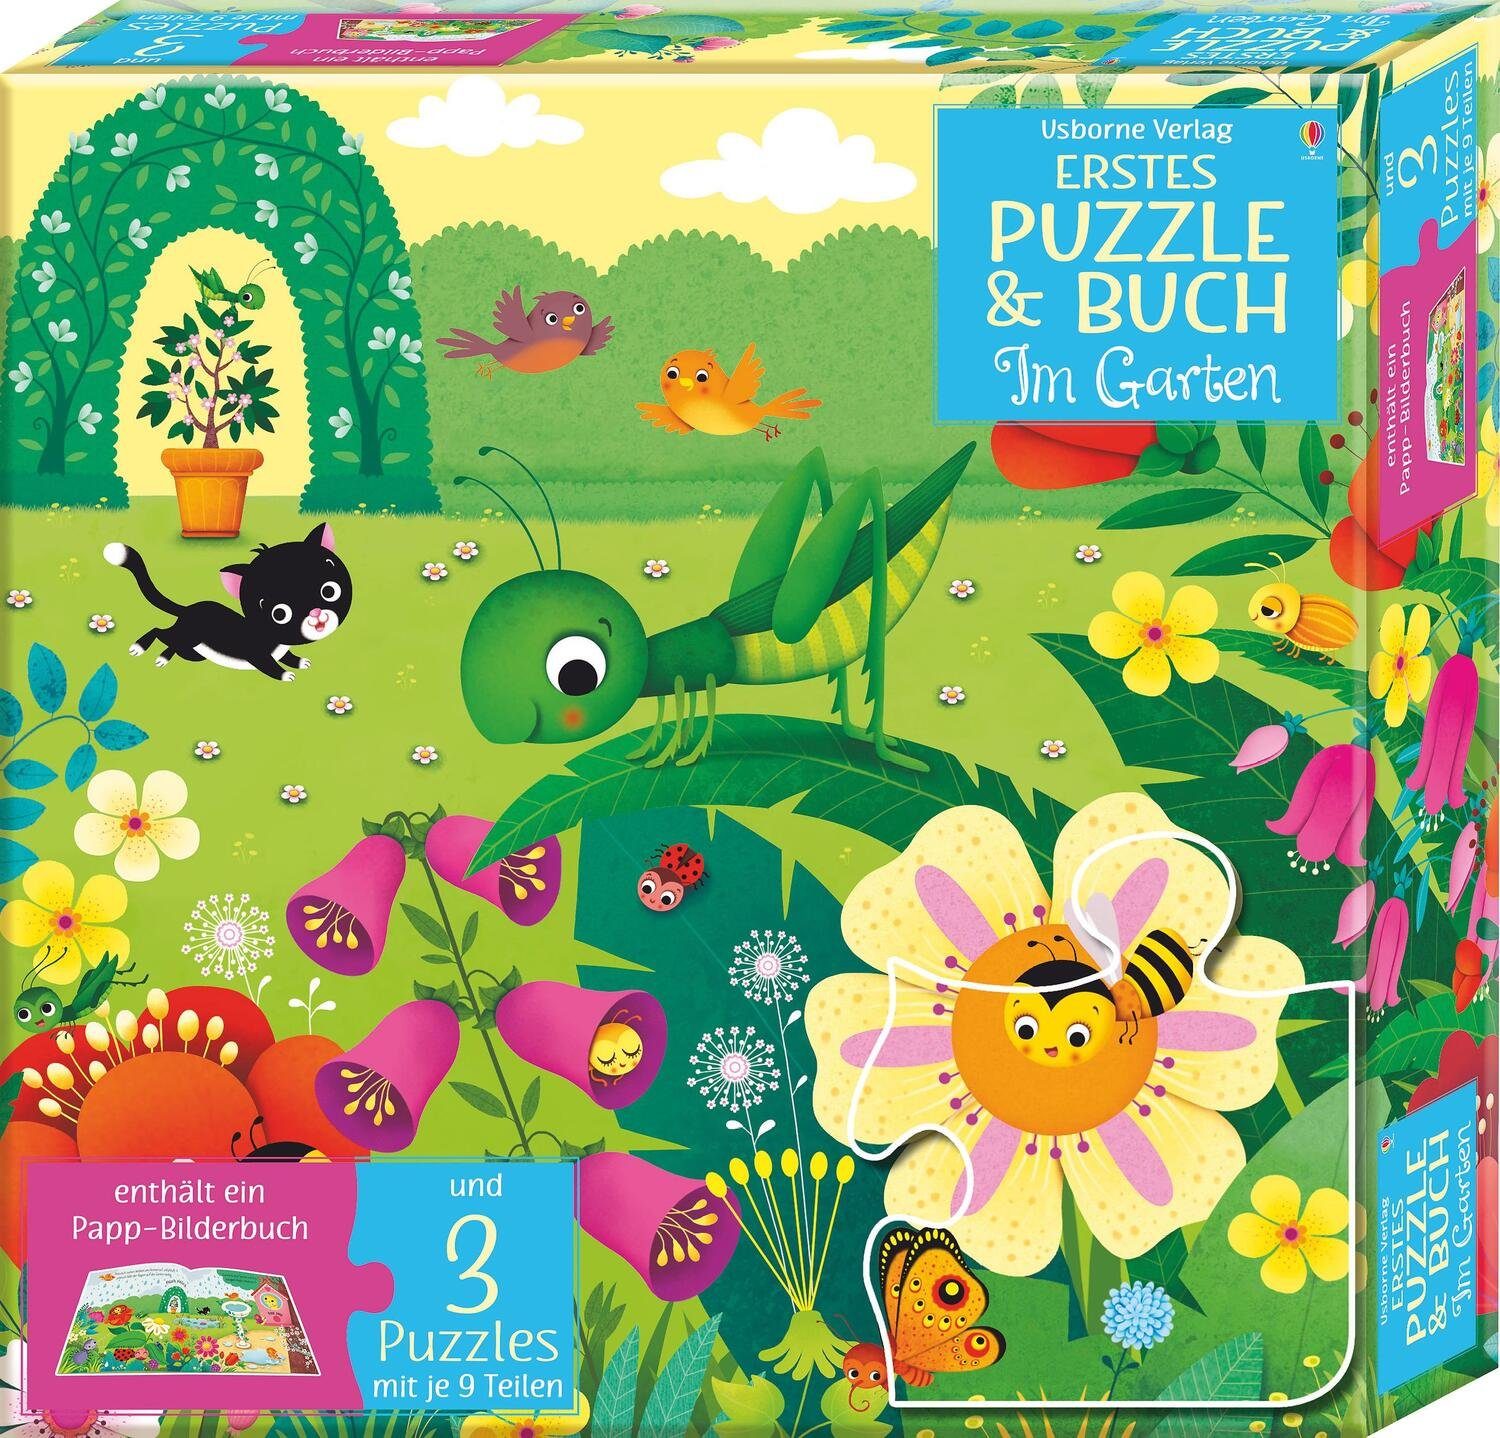 Garten, Puzzle Puzzleteile Buch: Erstes Puzzle Usborne Im & Verlag